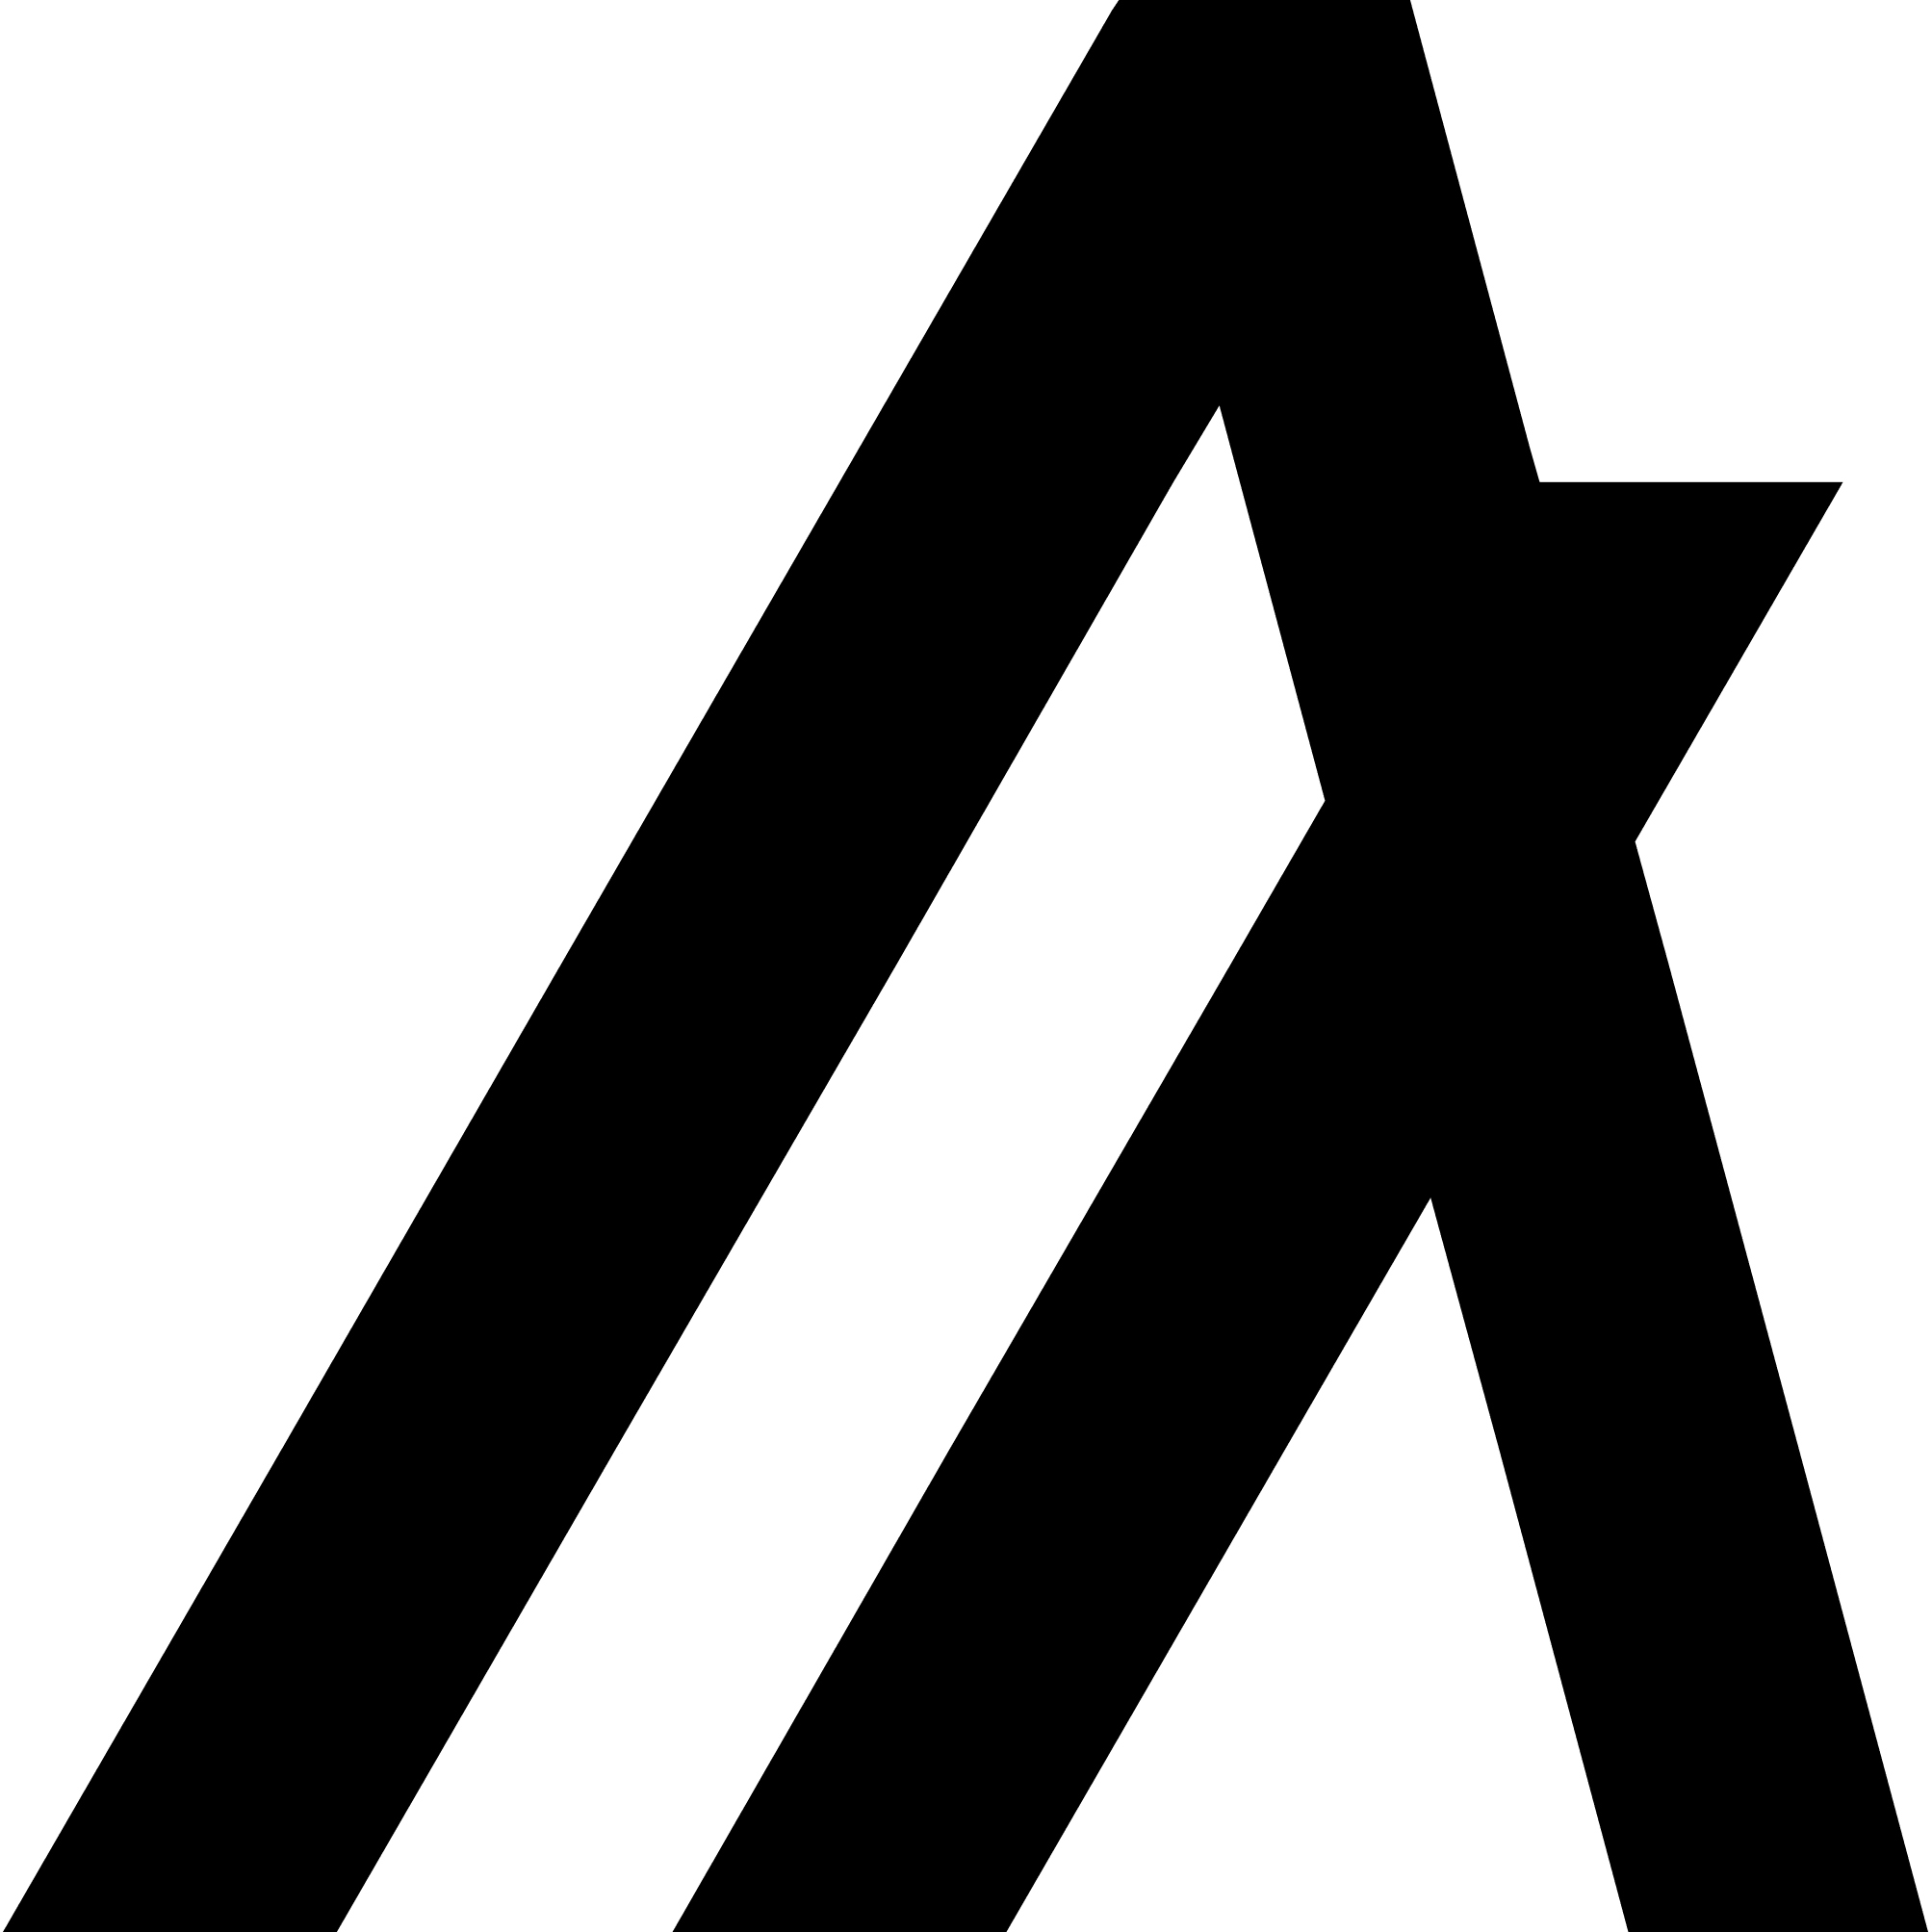 Algorand logo in png format